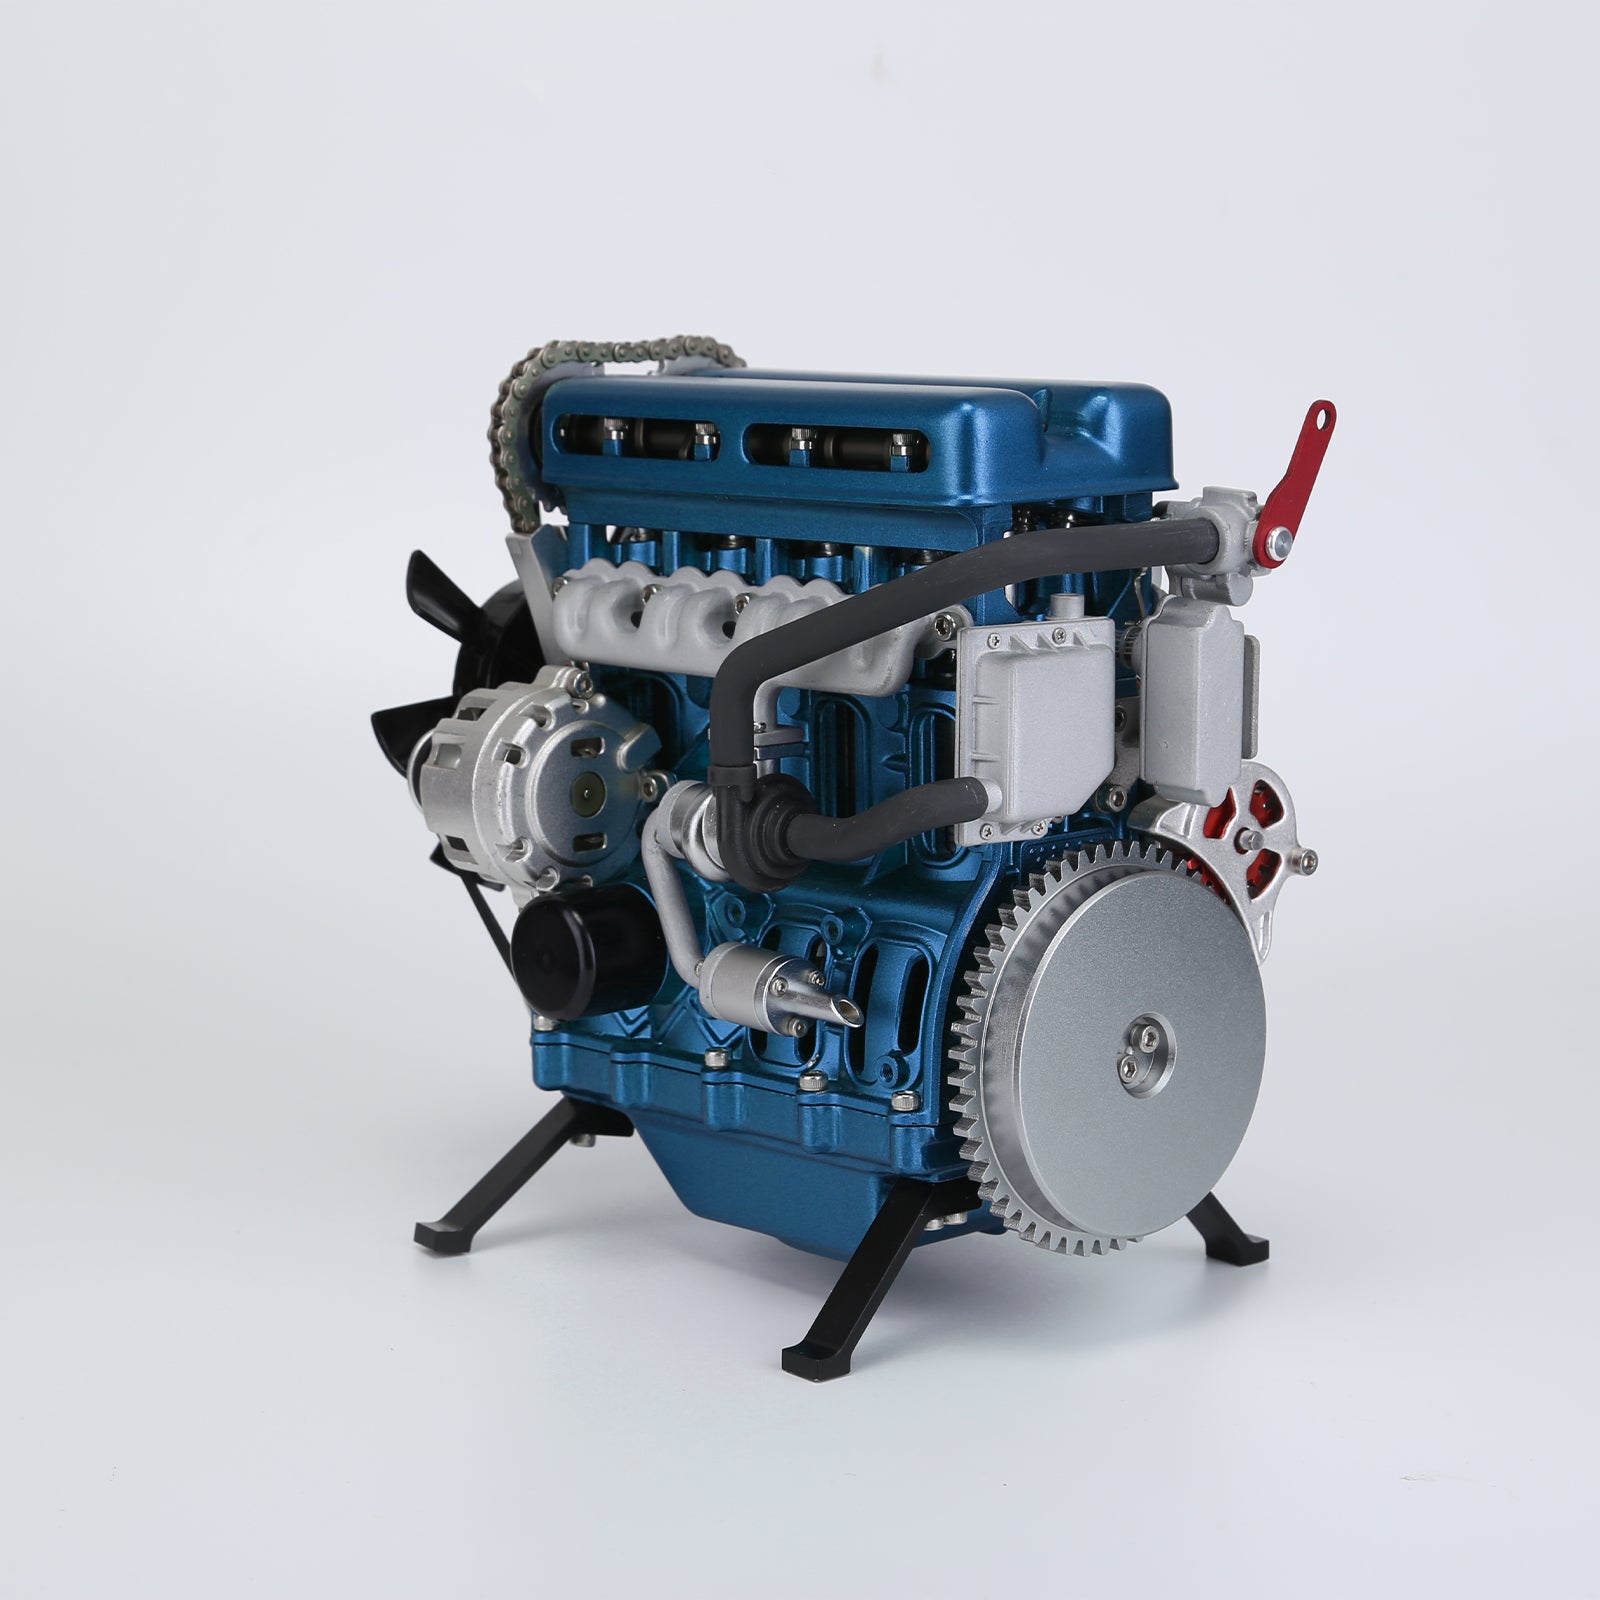 TECHING Metal DIY assembled car L4 engine model kit-enginediy